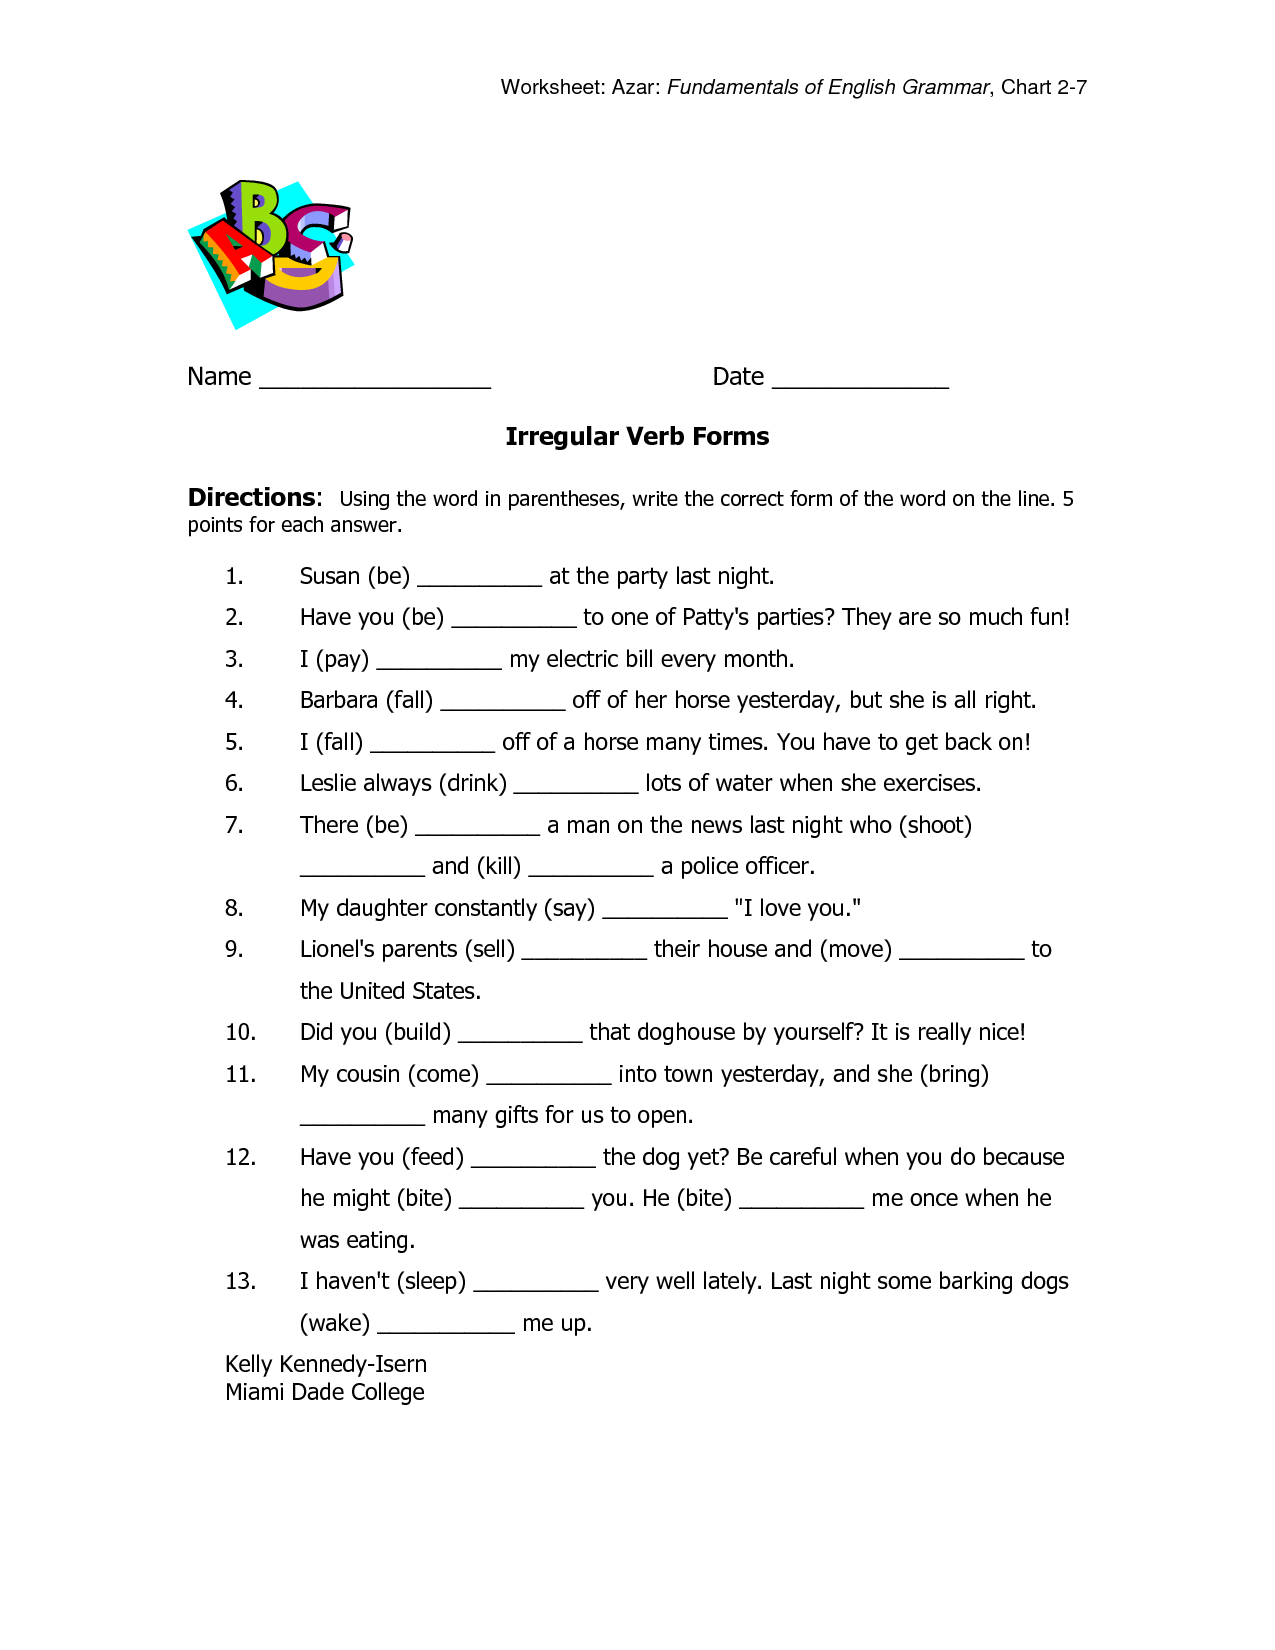 11-best-images-of-present-tense-verbs-worksheets-3rd-grade-verb-tense-worksheets-3rd-grade